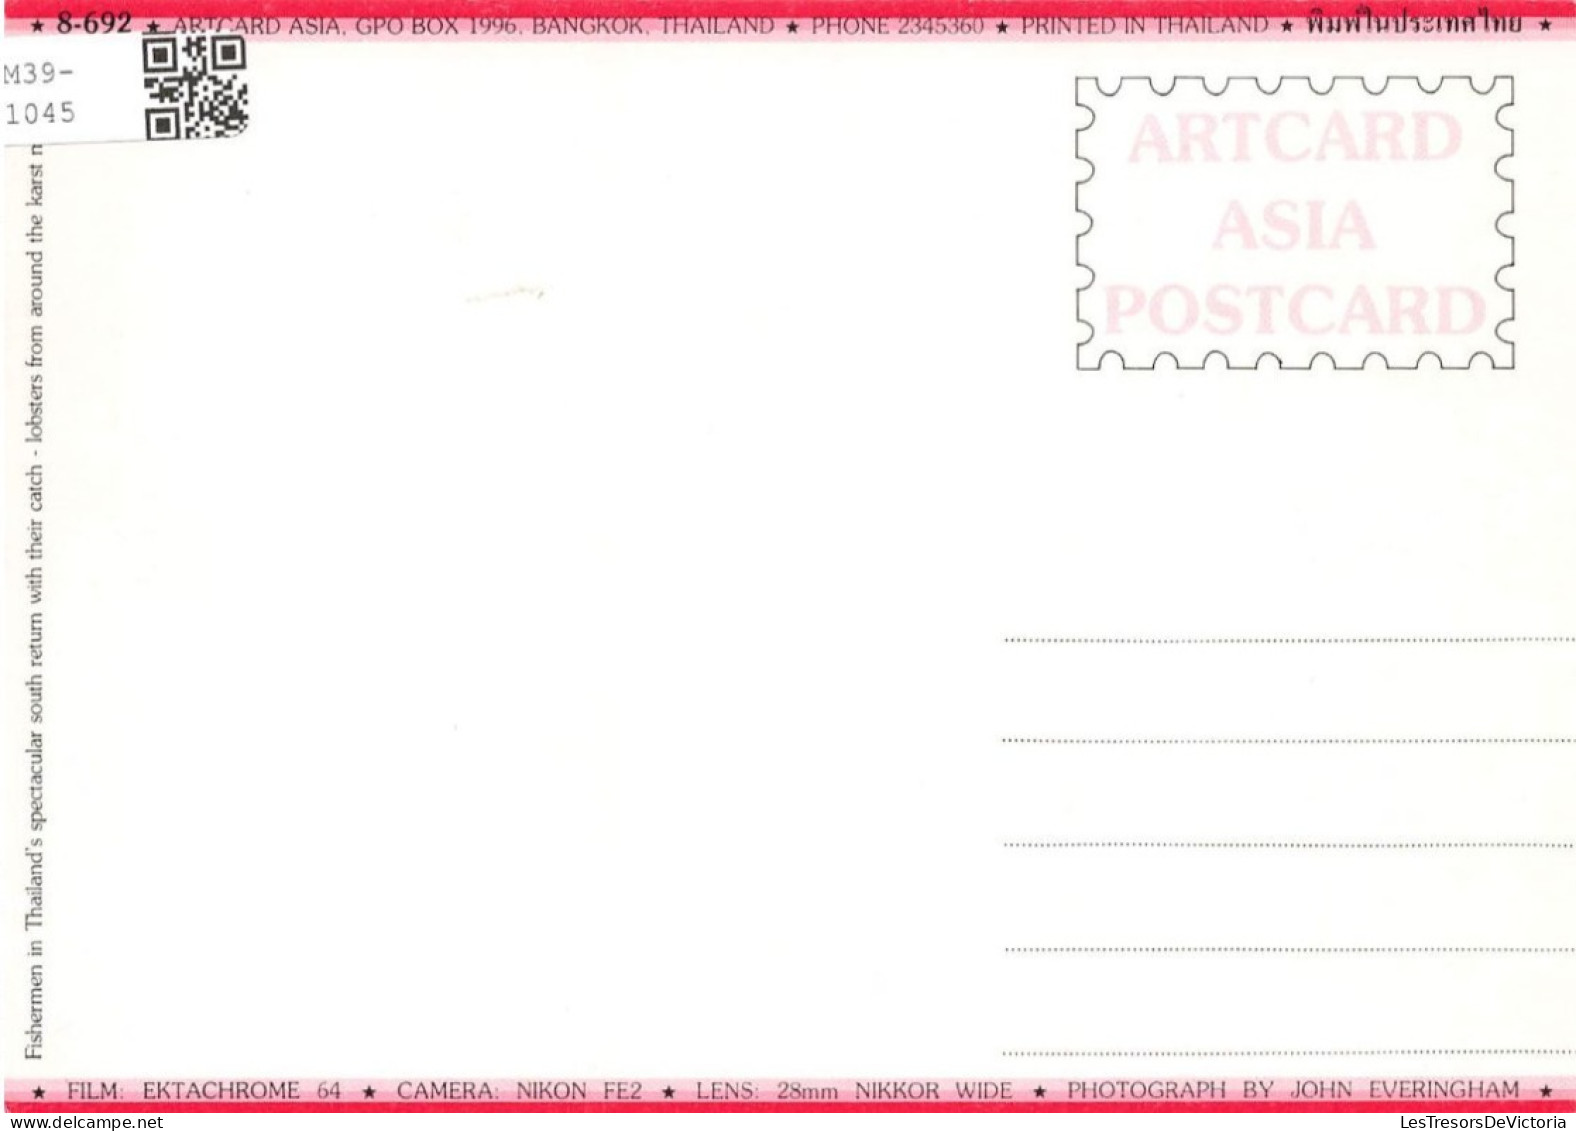 THAÏLANDE - Artcard Asia - Bangkok - Asia - Thailand - Carte Postale - Thaïland